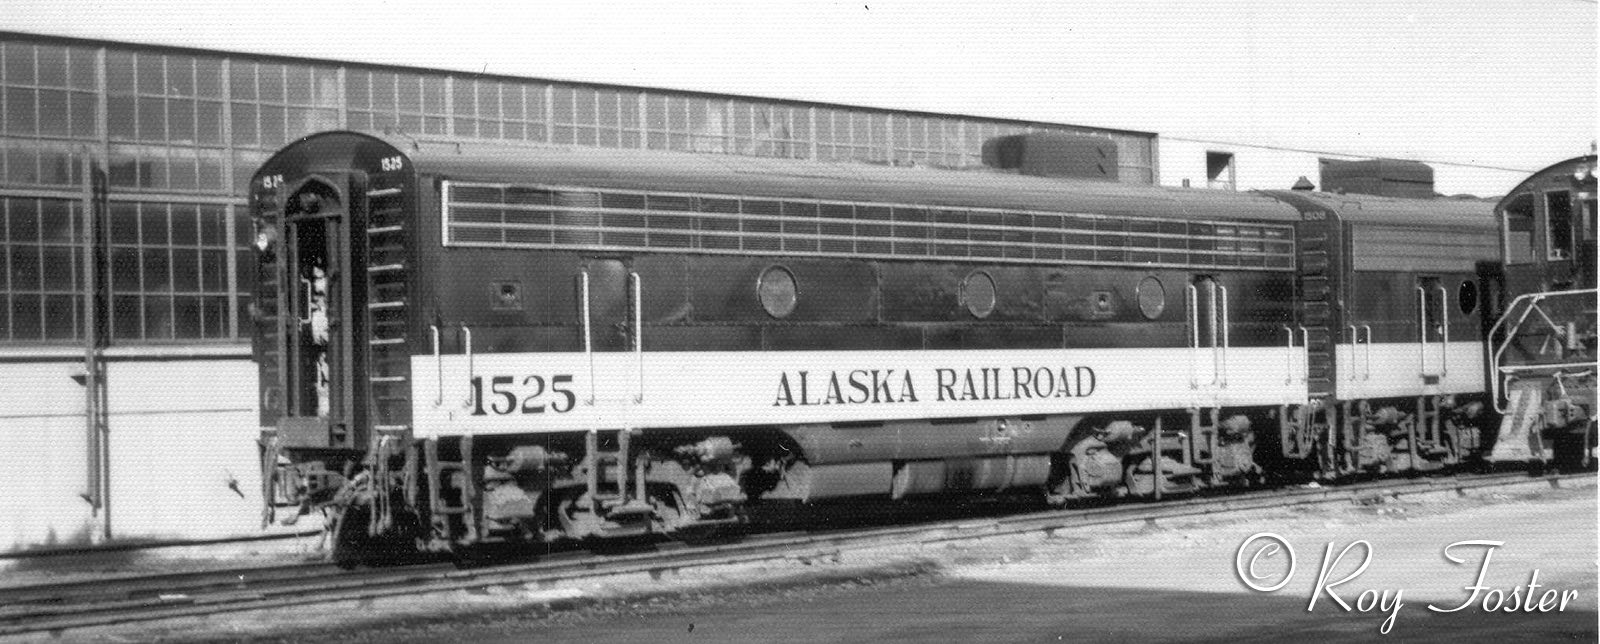 ARR 1526, Anchorage, 4-29-74